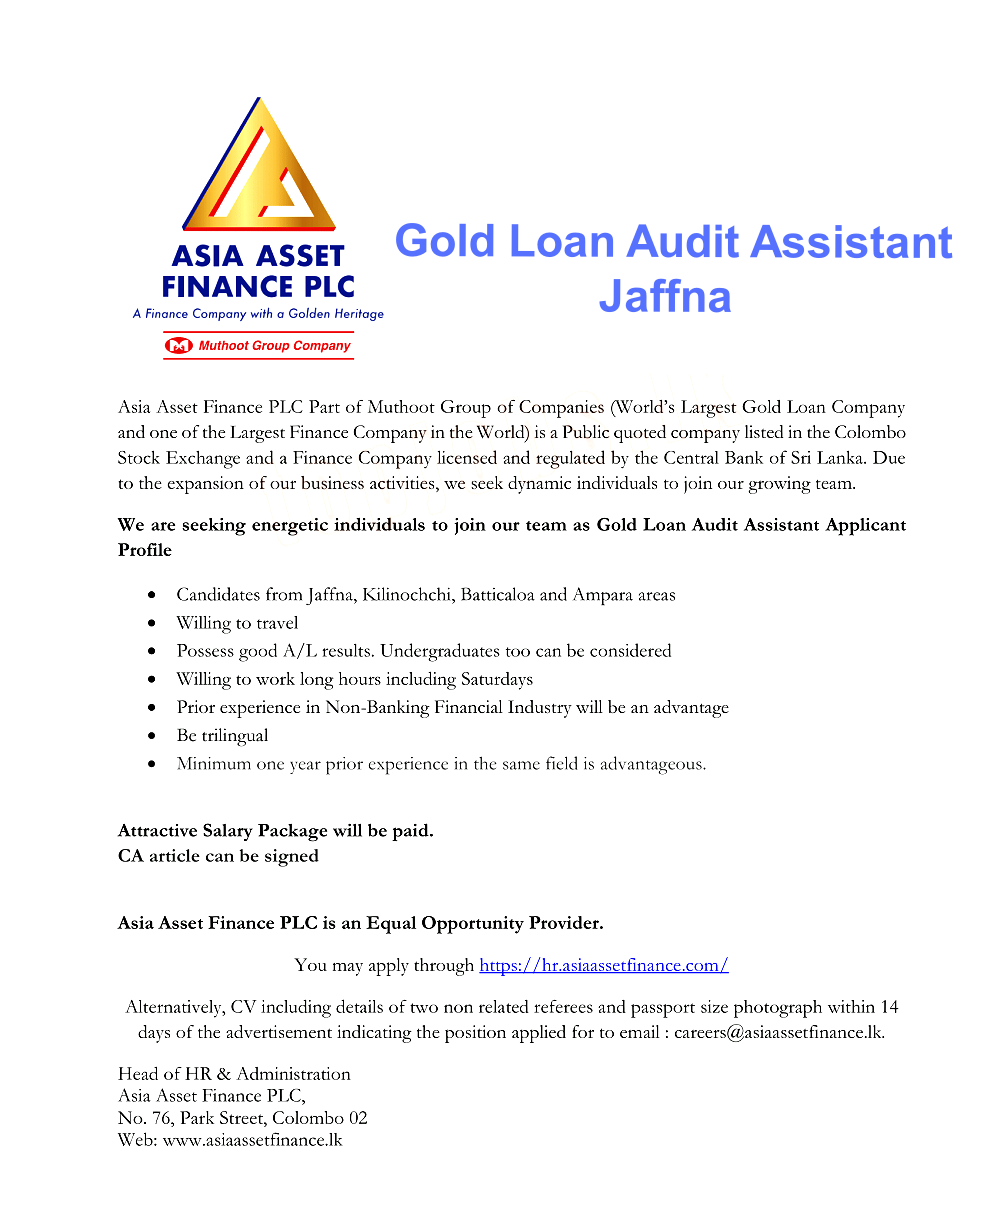 Gold Loan Audit Assistant Job Vacancy - Jaffna Asia Asset Finance Jobs Vacancies Details